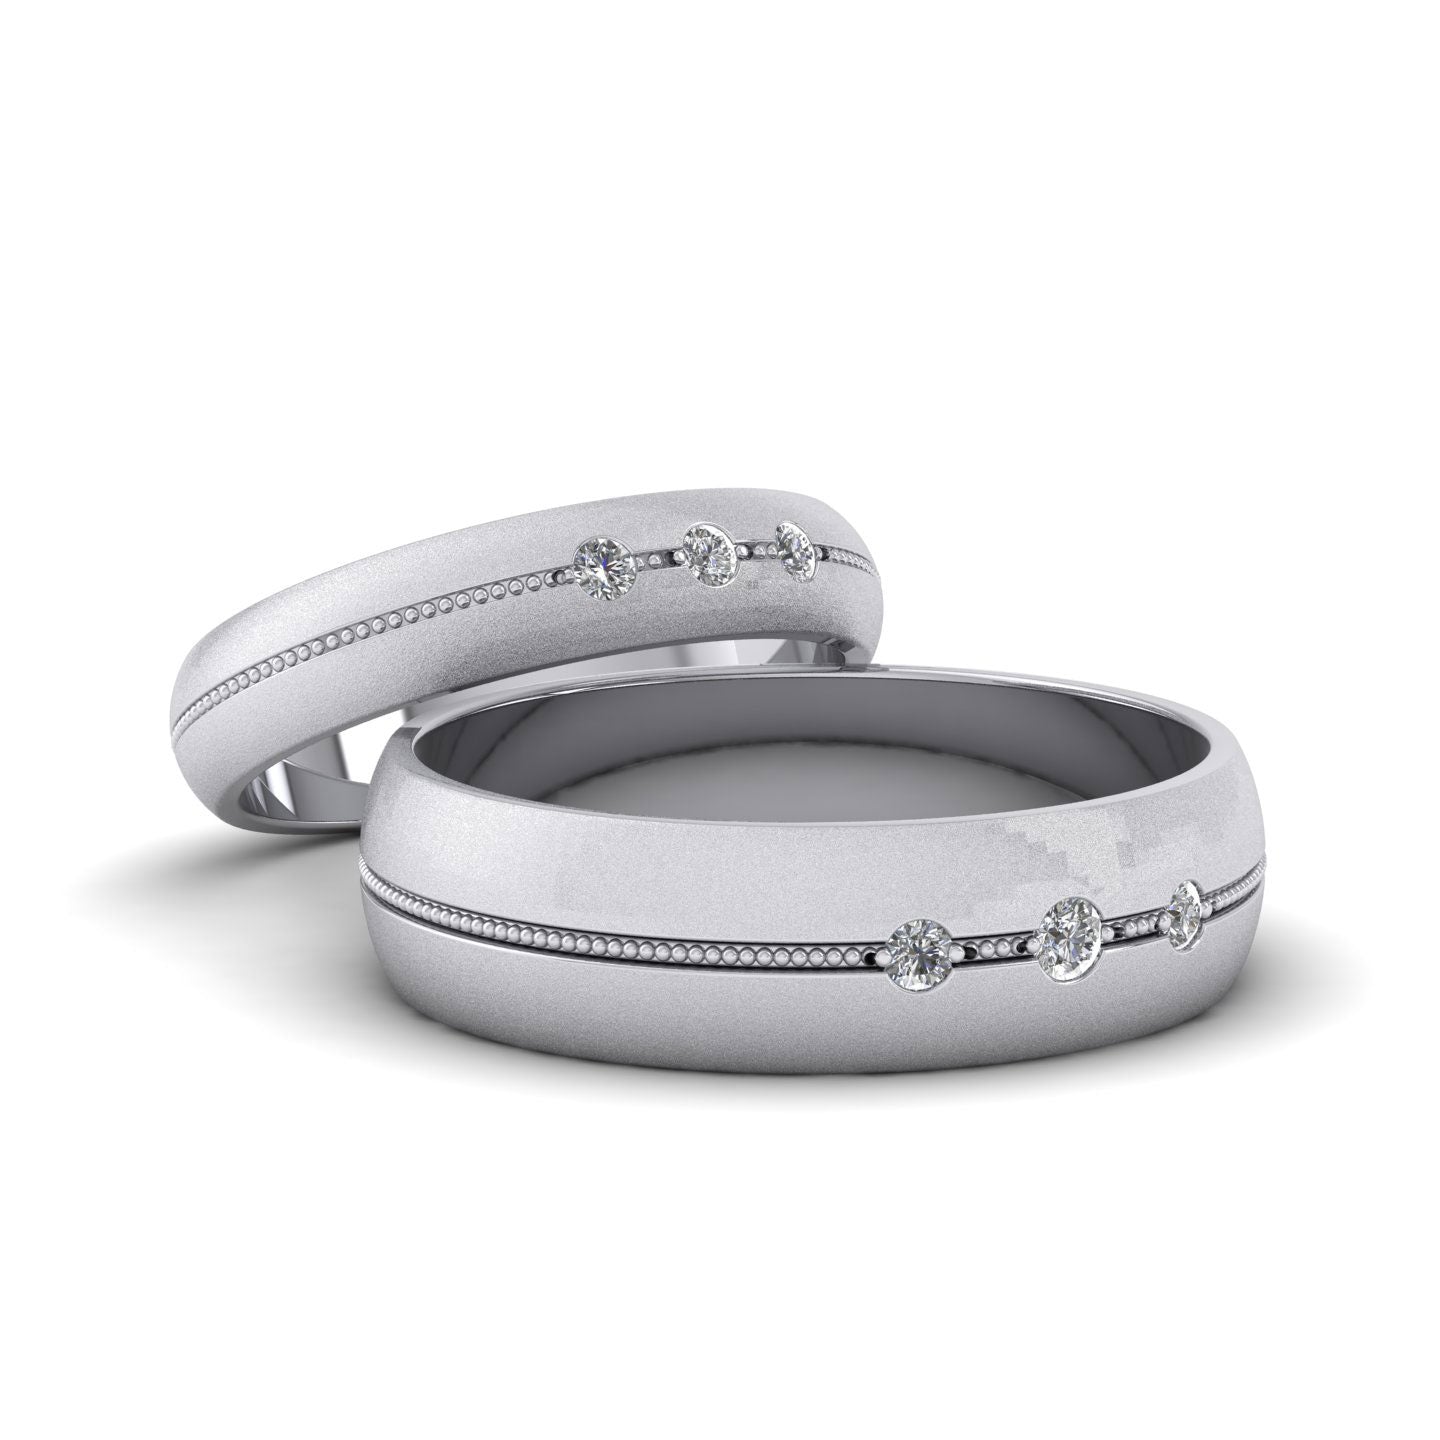 Three Diamond And Centre Millgrain Pattern 950 Platinum 6mm Wedding Ring